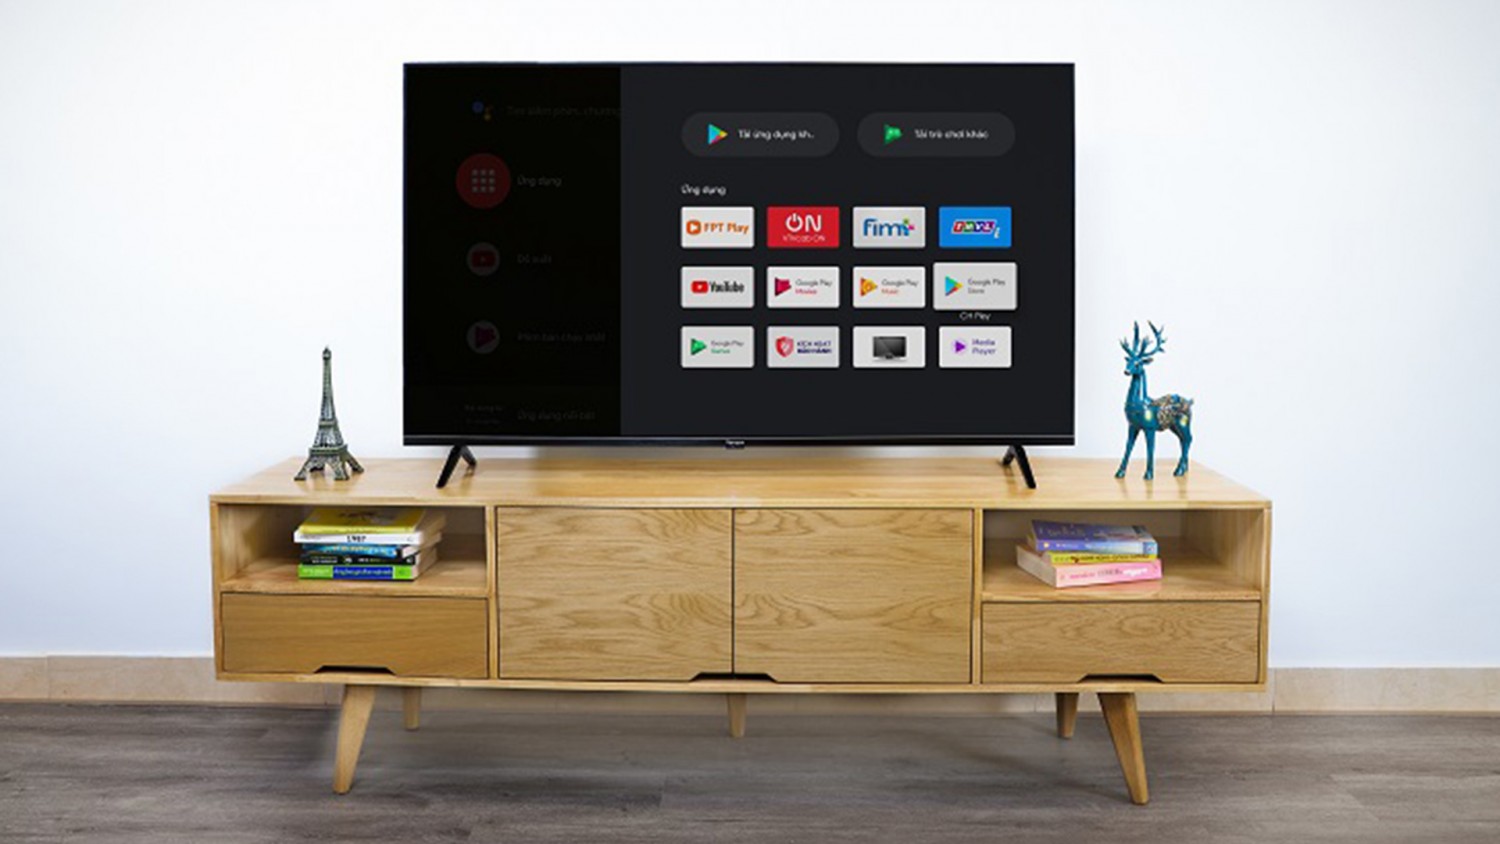 Vsmart представила серию 4K-телевизоров с поддержкой Dolby Digital Plus